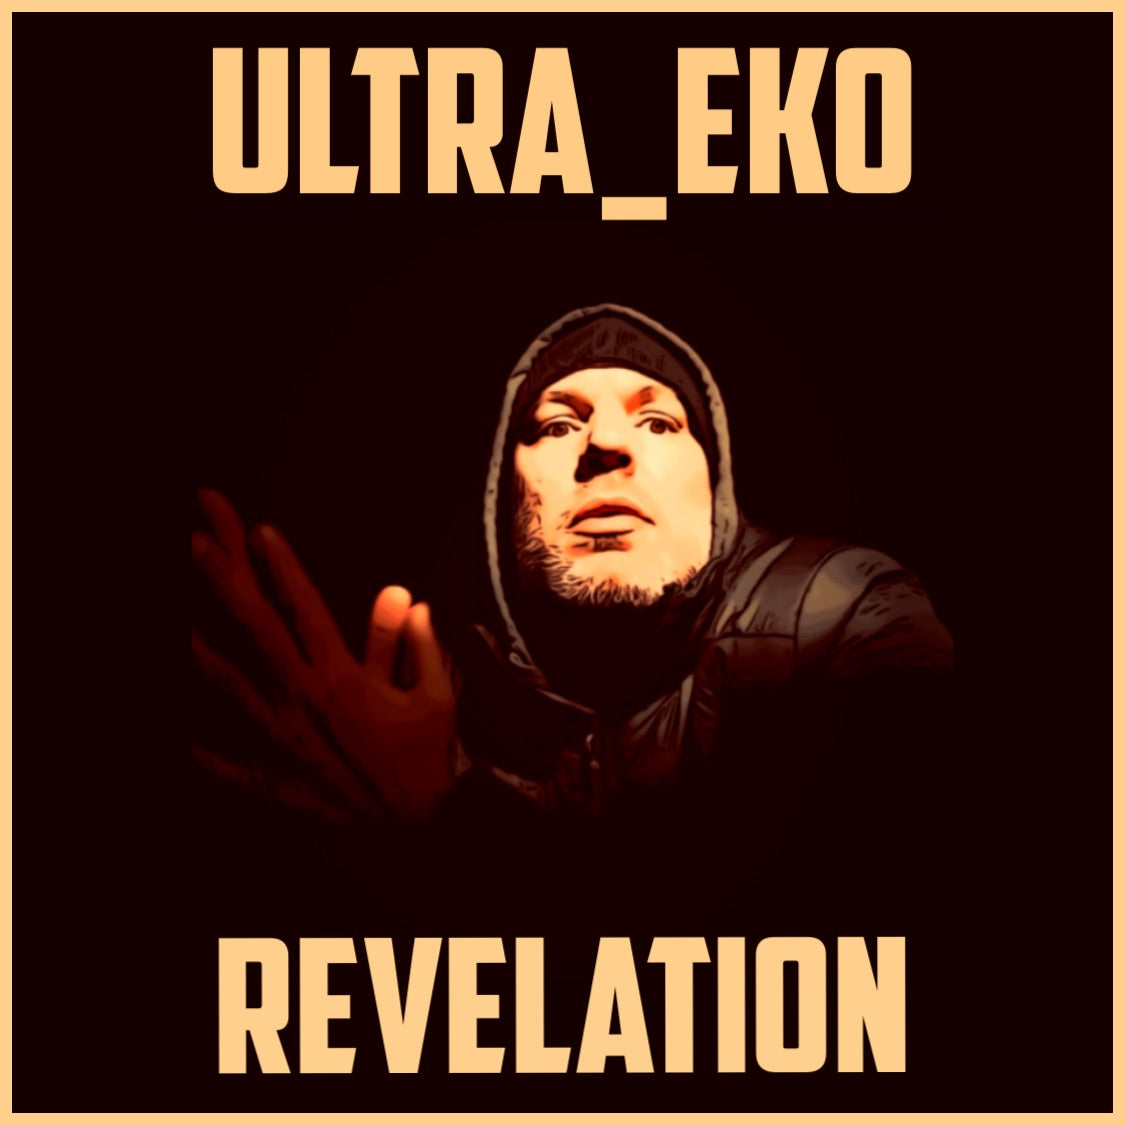 Ultra_eko – ‘Revelation’